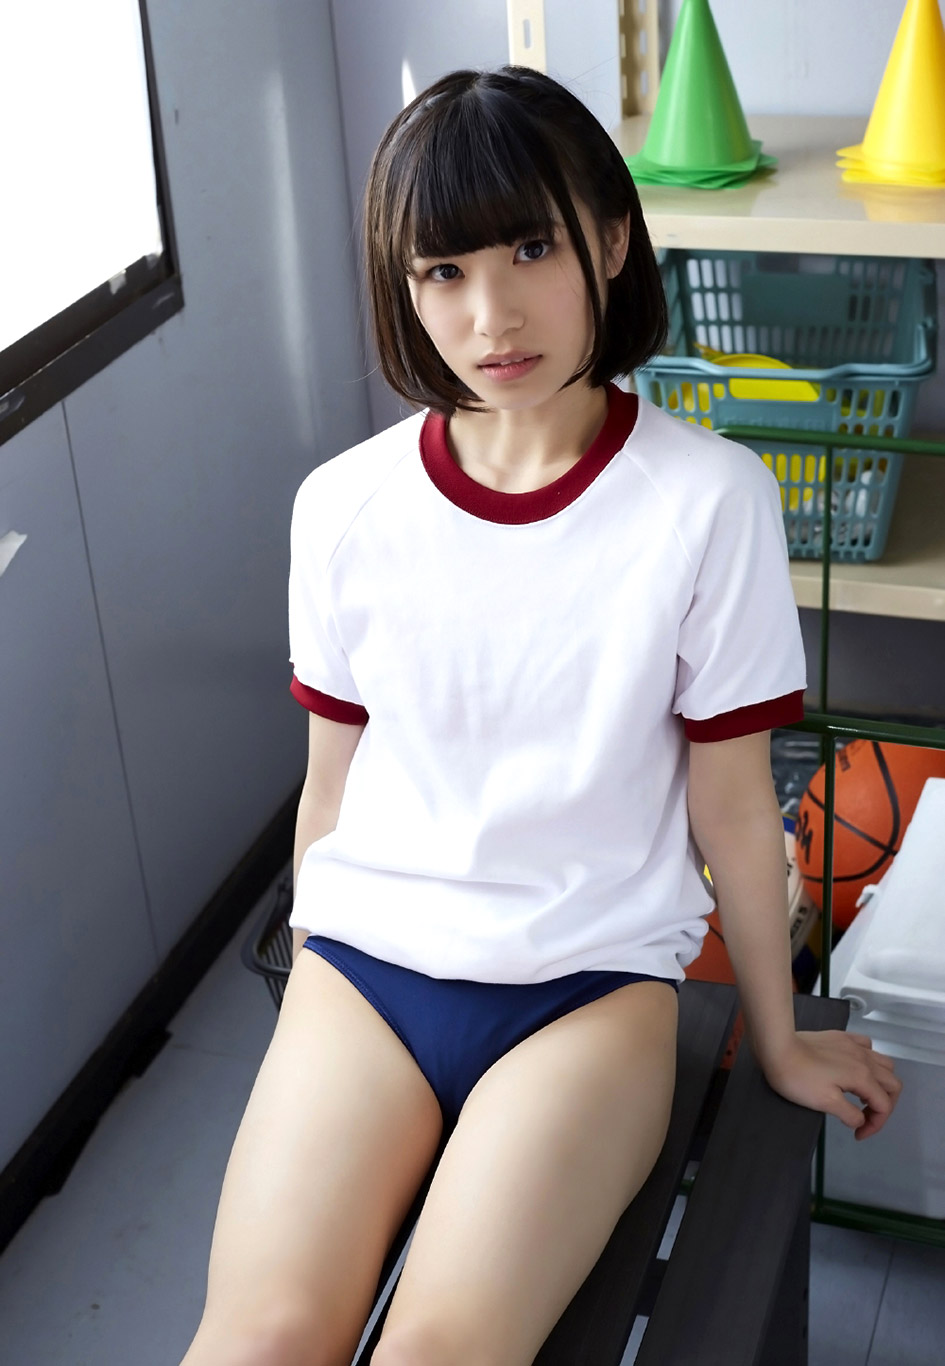 japanese schoolgirl naked photo leaks 